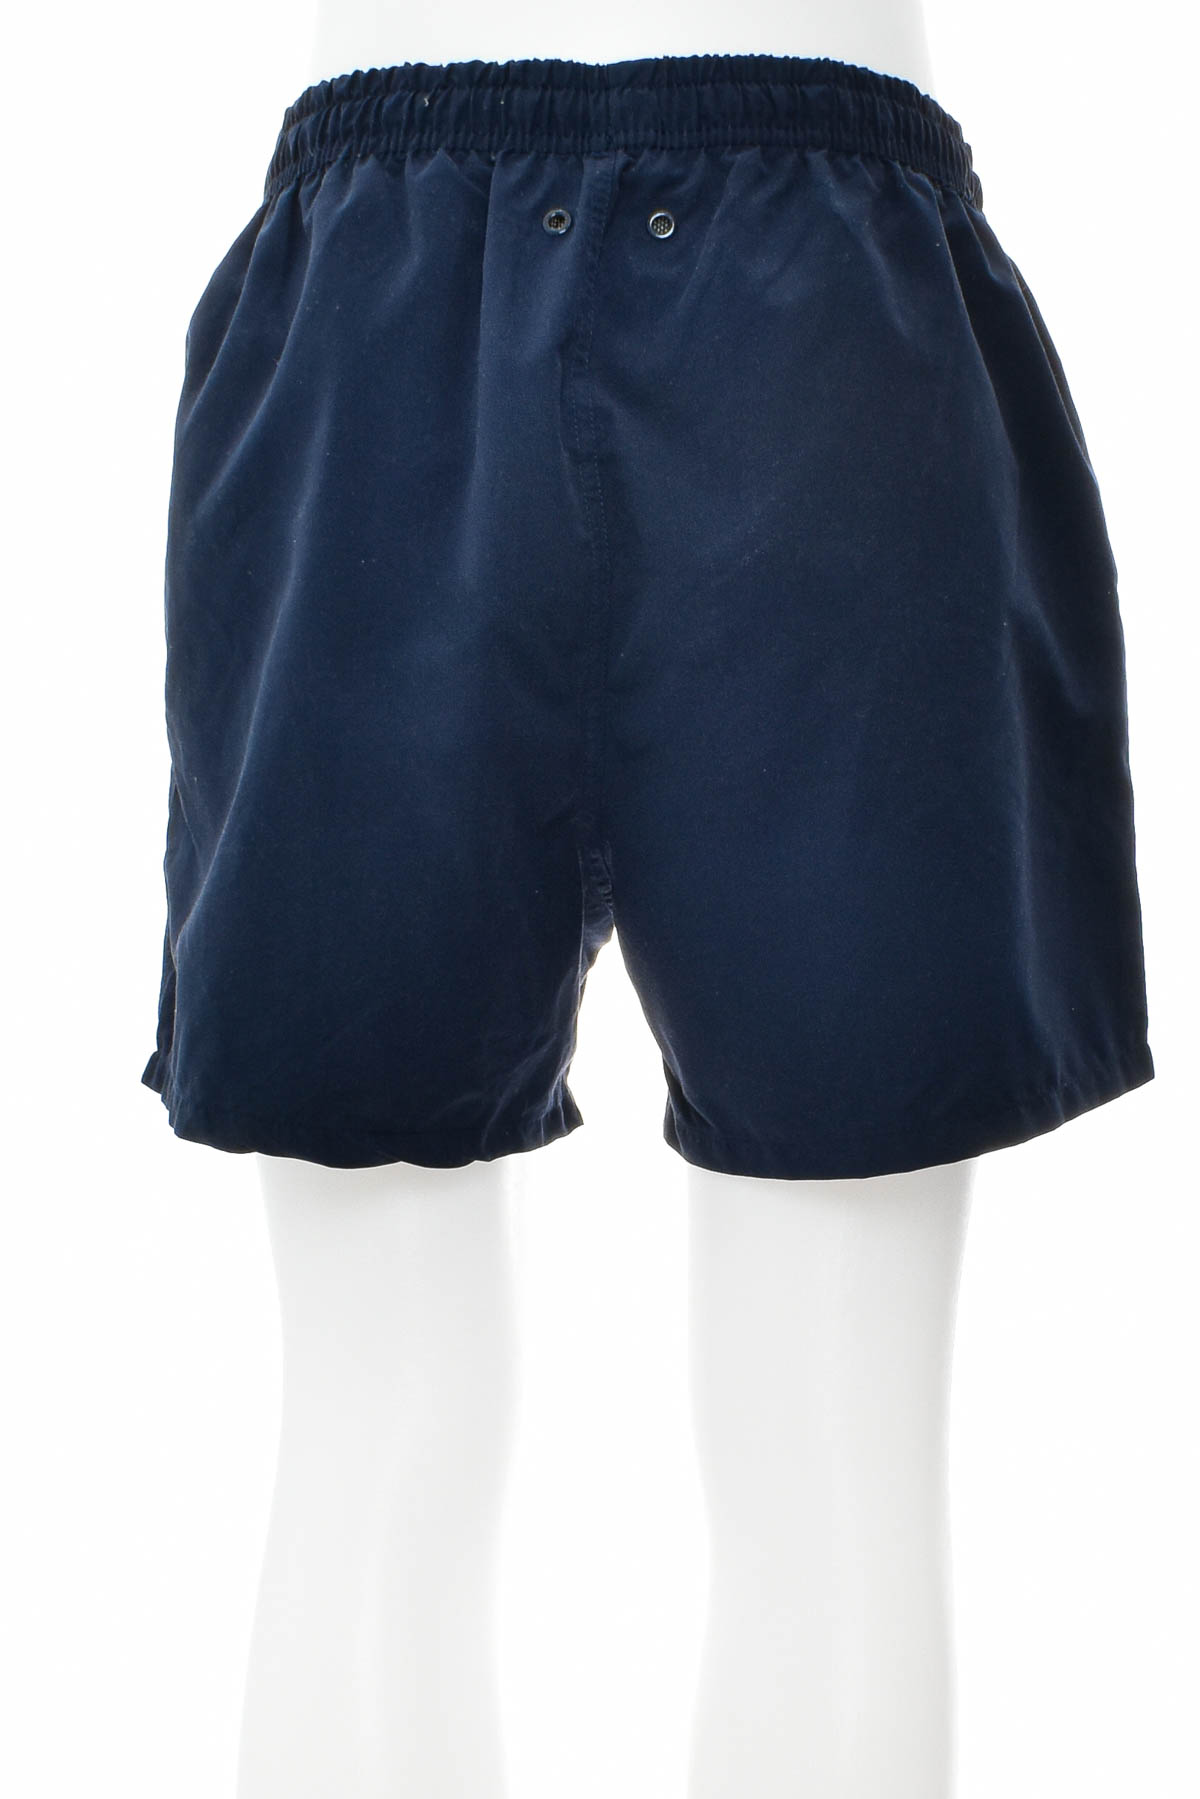 Men's shorts - Manguun sports - 1